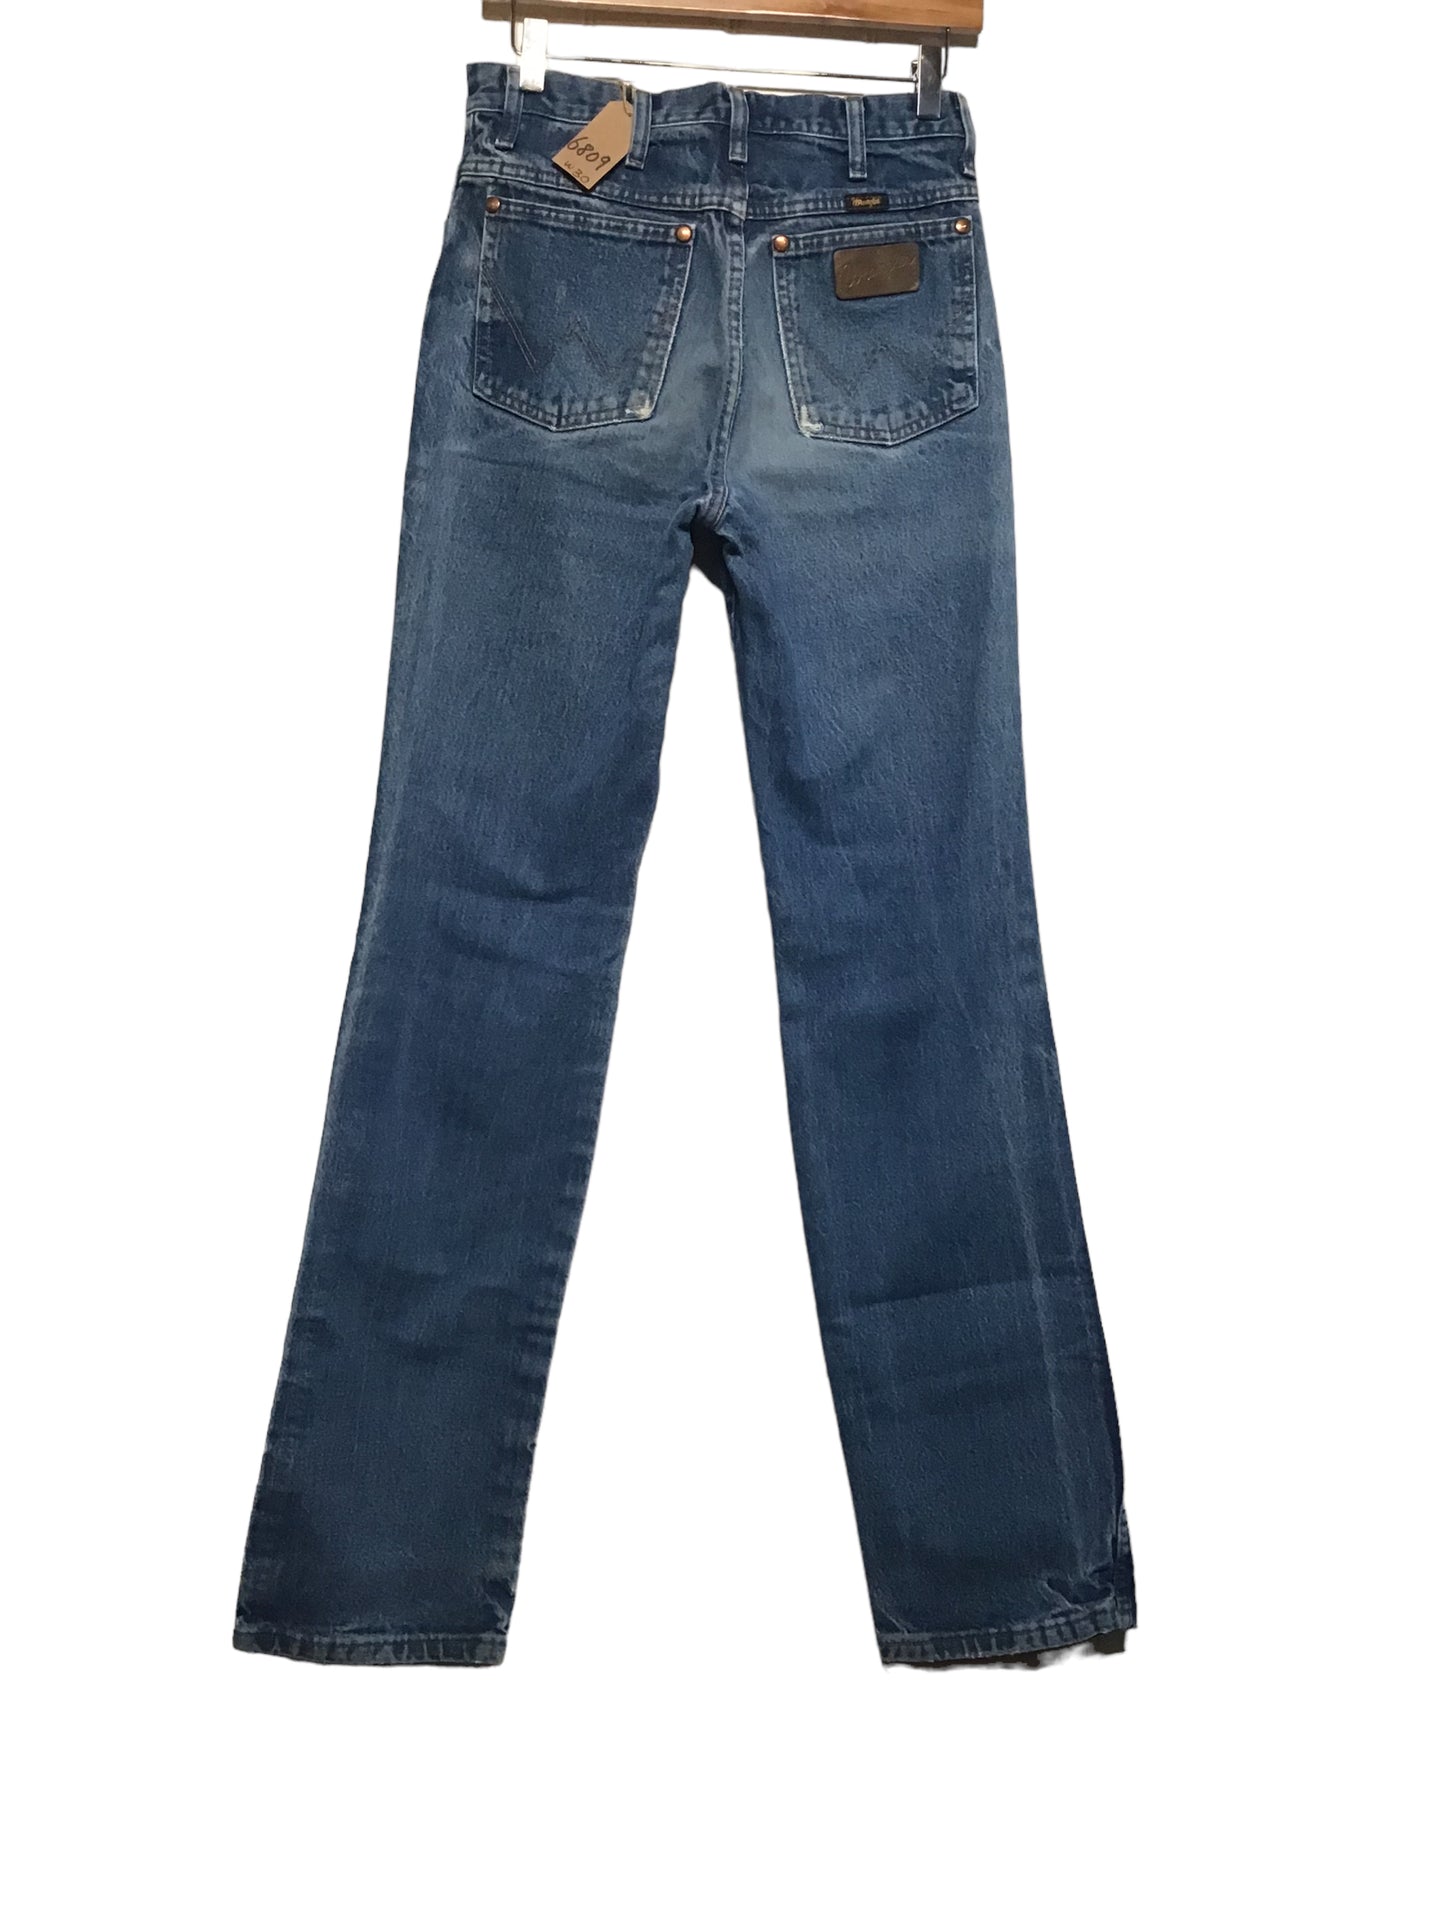 Wrangler Jeans (30x34)